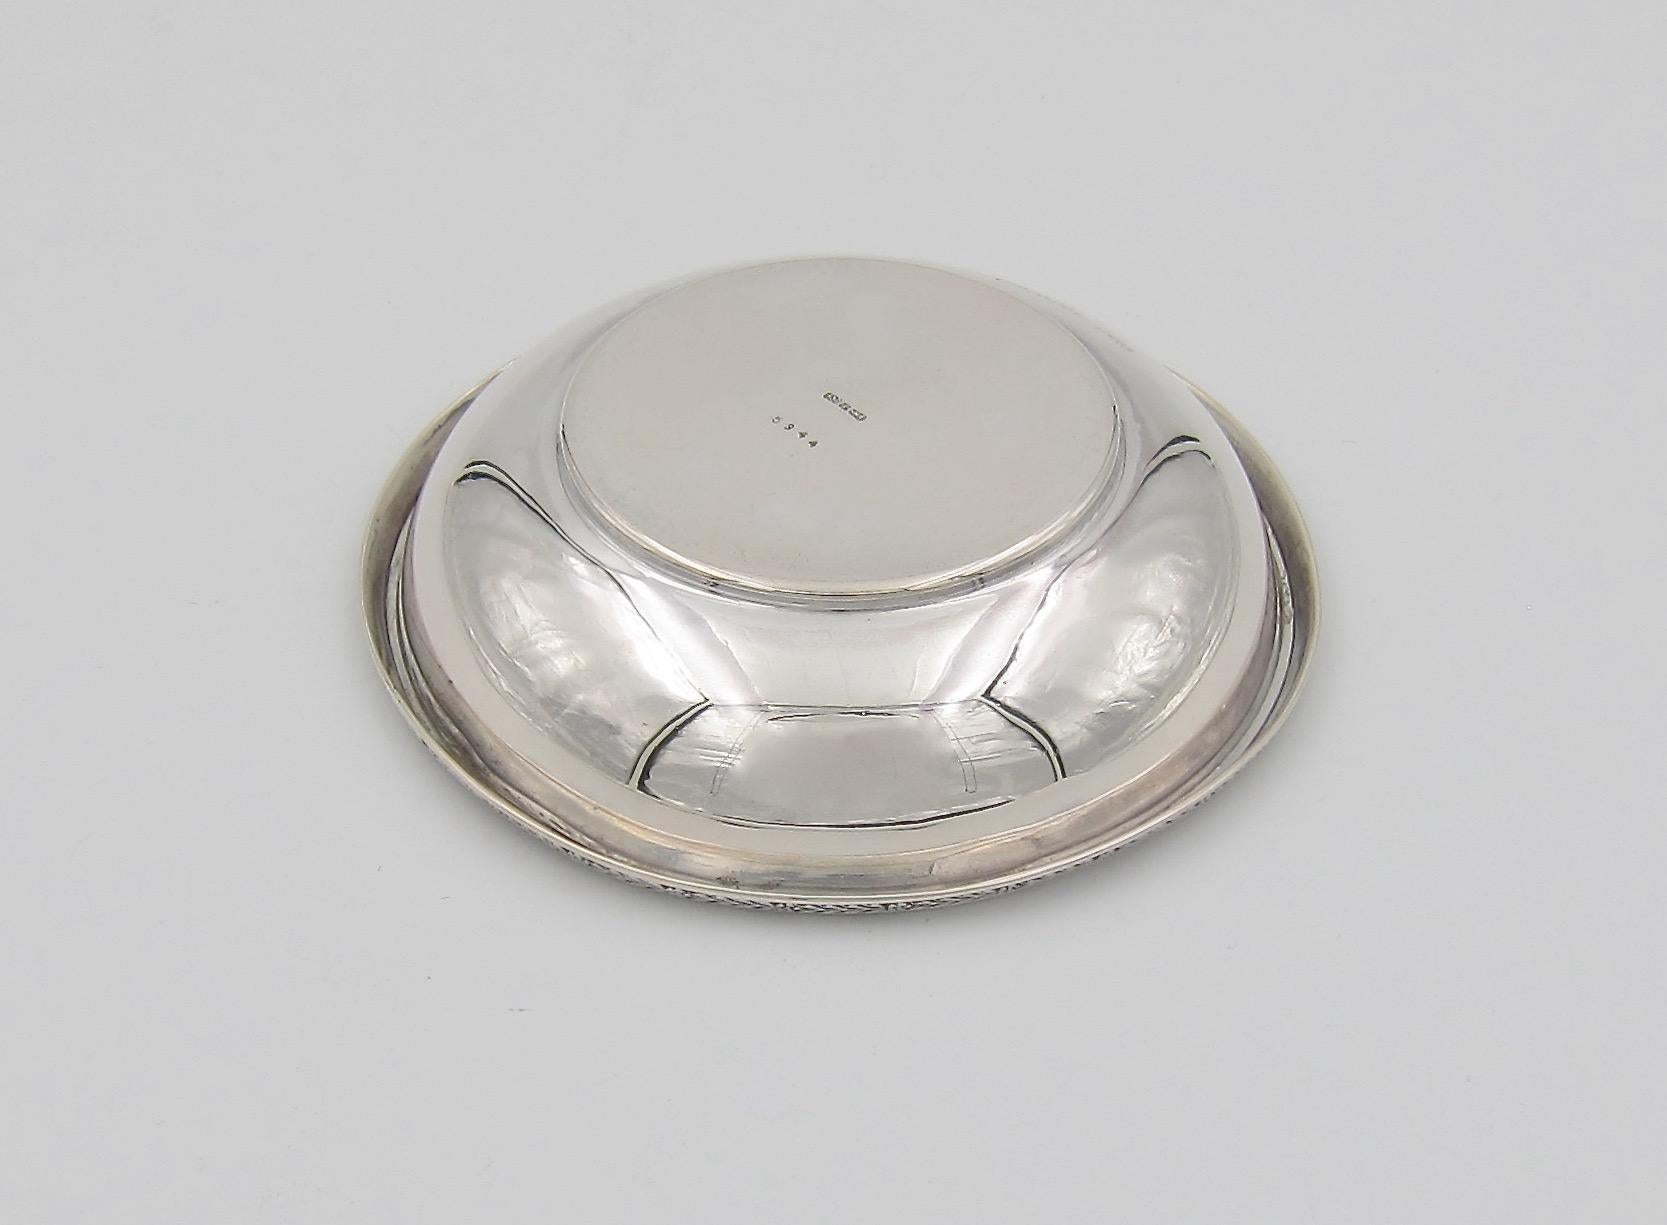 David Andersen 835 Silver and Enamel Dish or Bottle Coaster 4